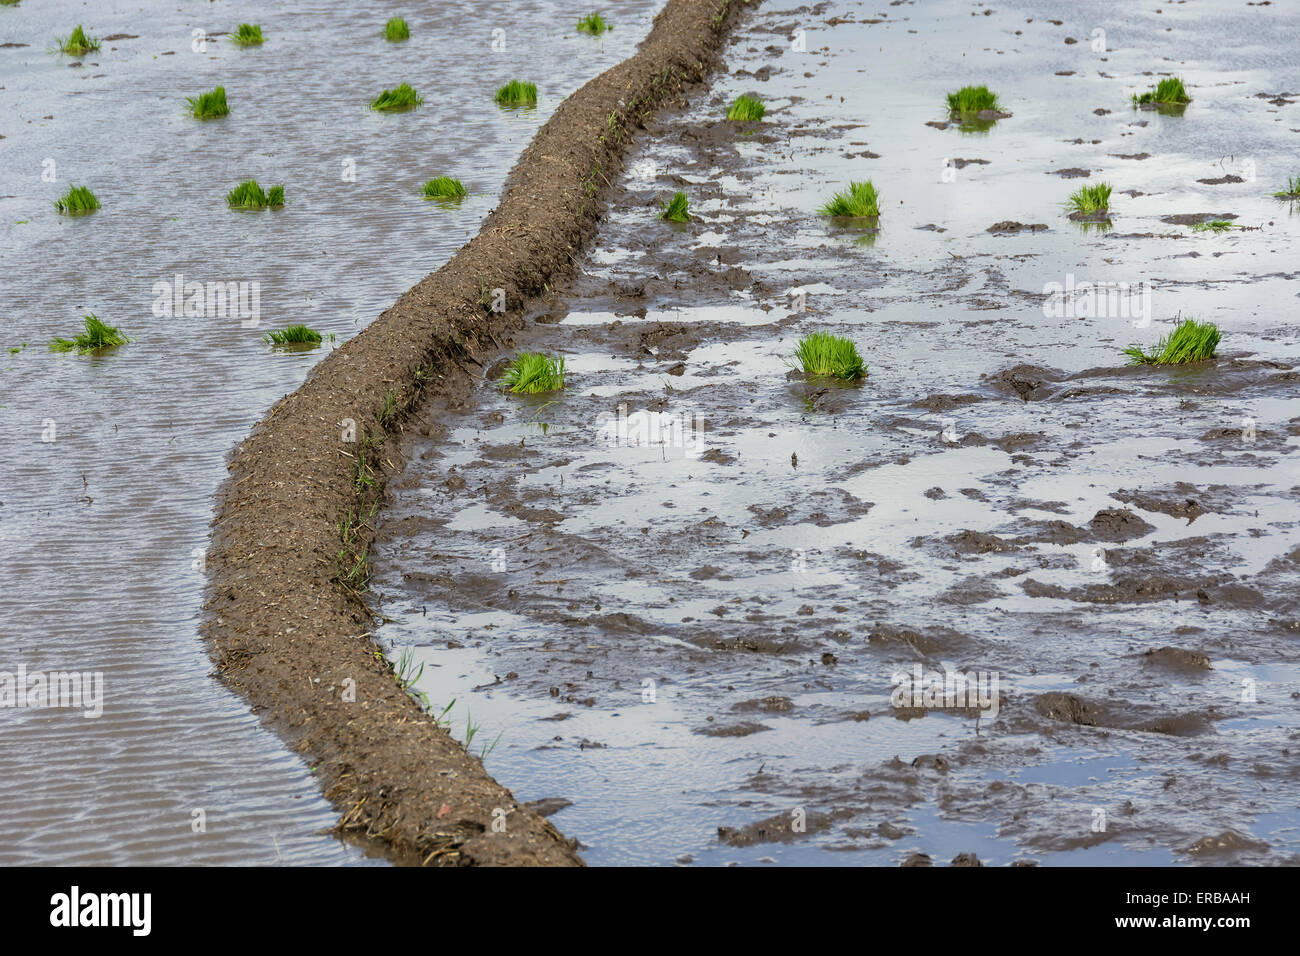 Philippinen Reis Sämlinge in einem schlammigen Reisfeld Stockfoto